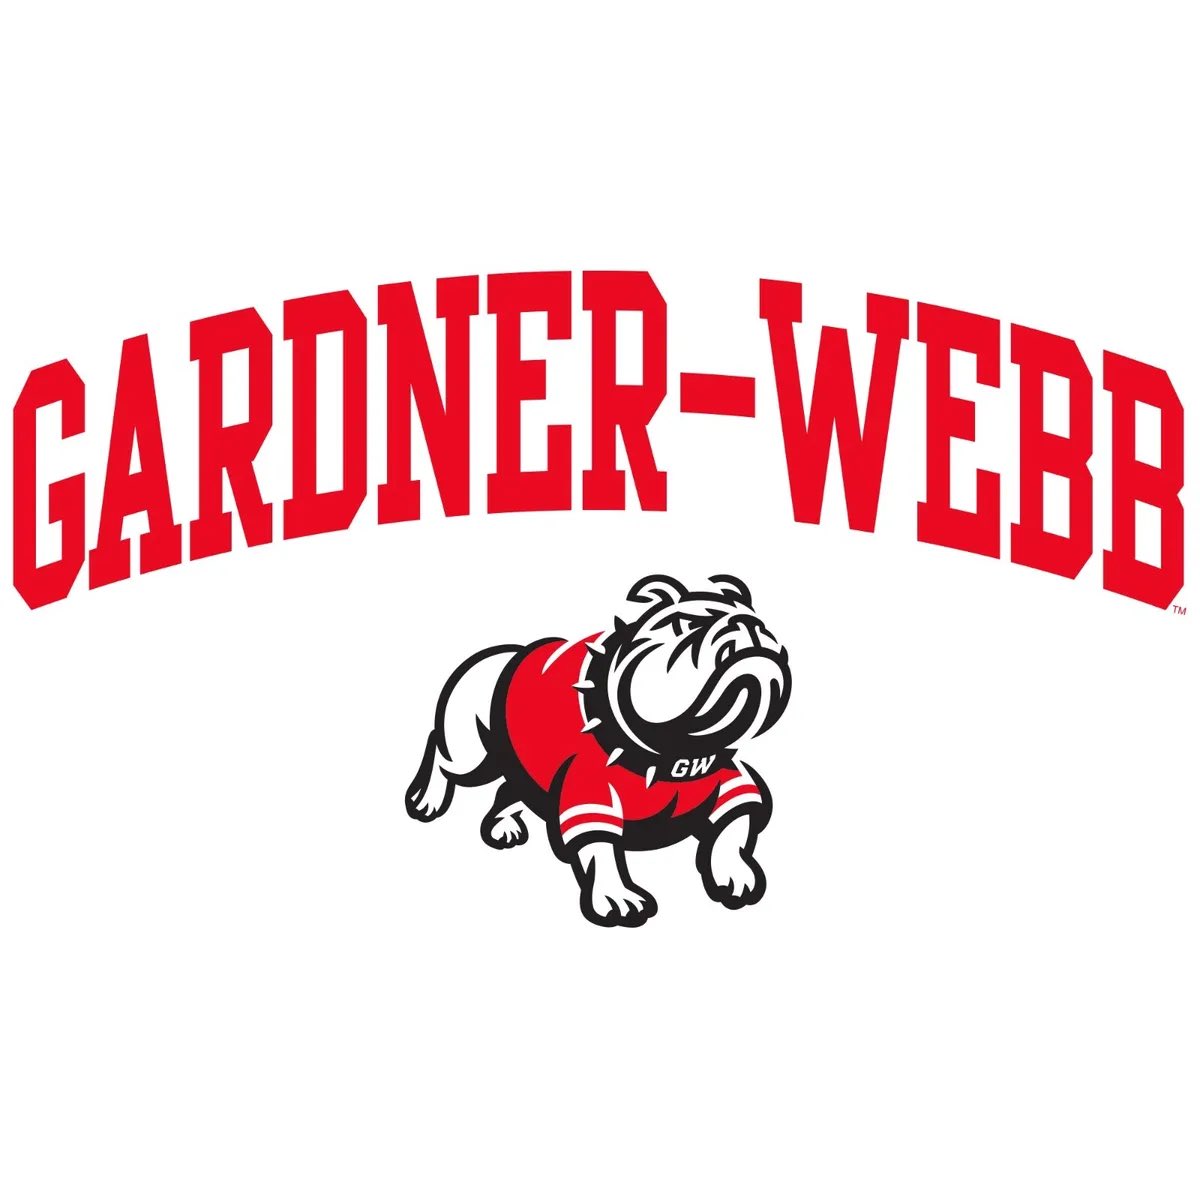 I am extremely blessed to receive a D1 offer from Gardner-Webb University!! @GWUCoachPinnix @KirkHoza @CoachSorg @CoachKirkland1 @adamgorney